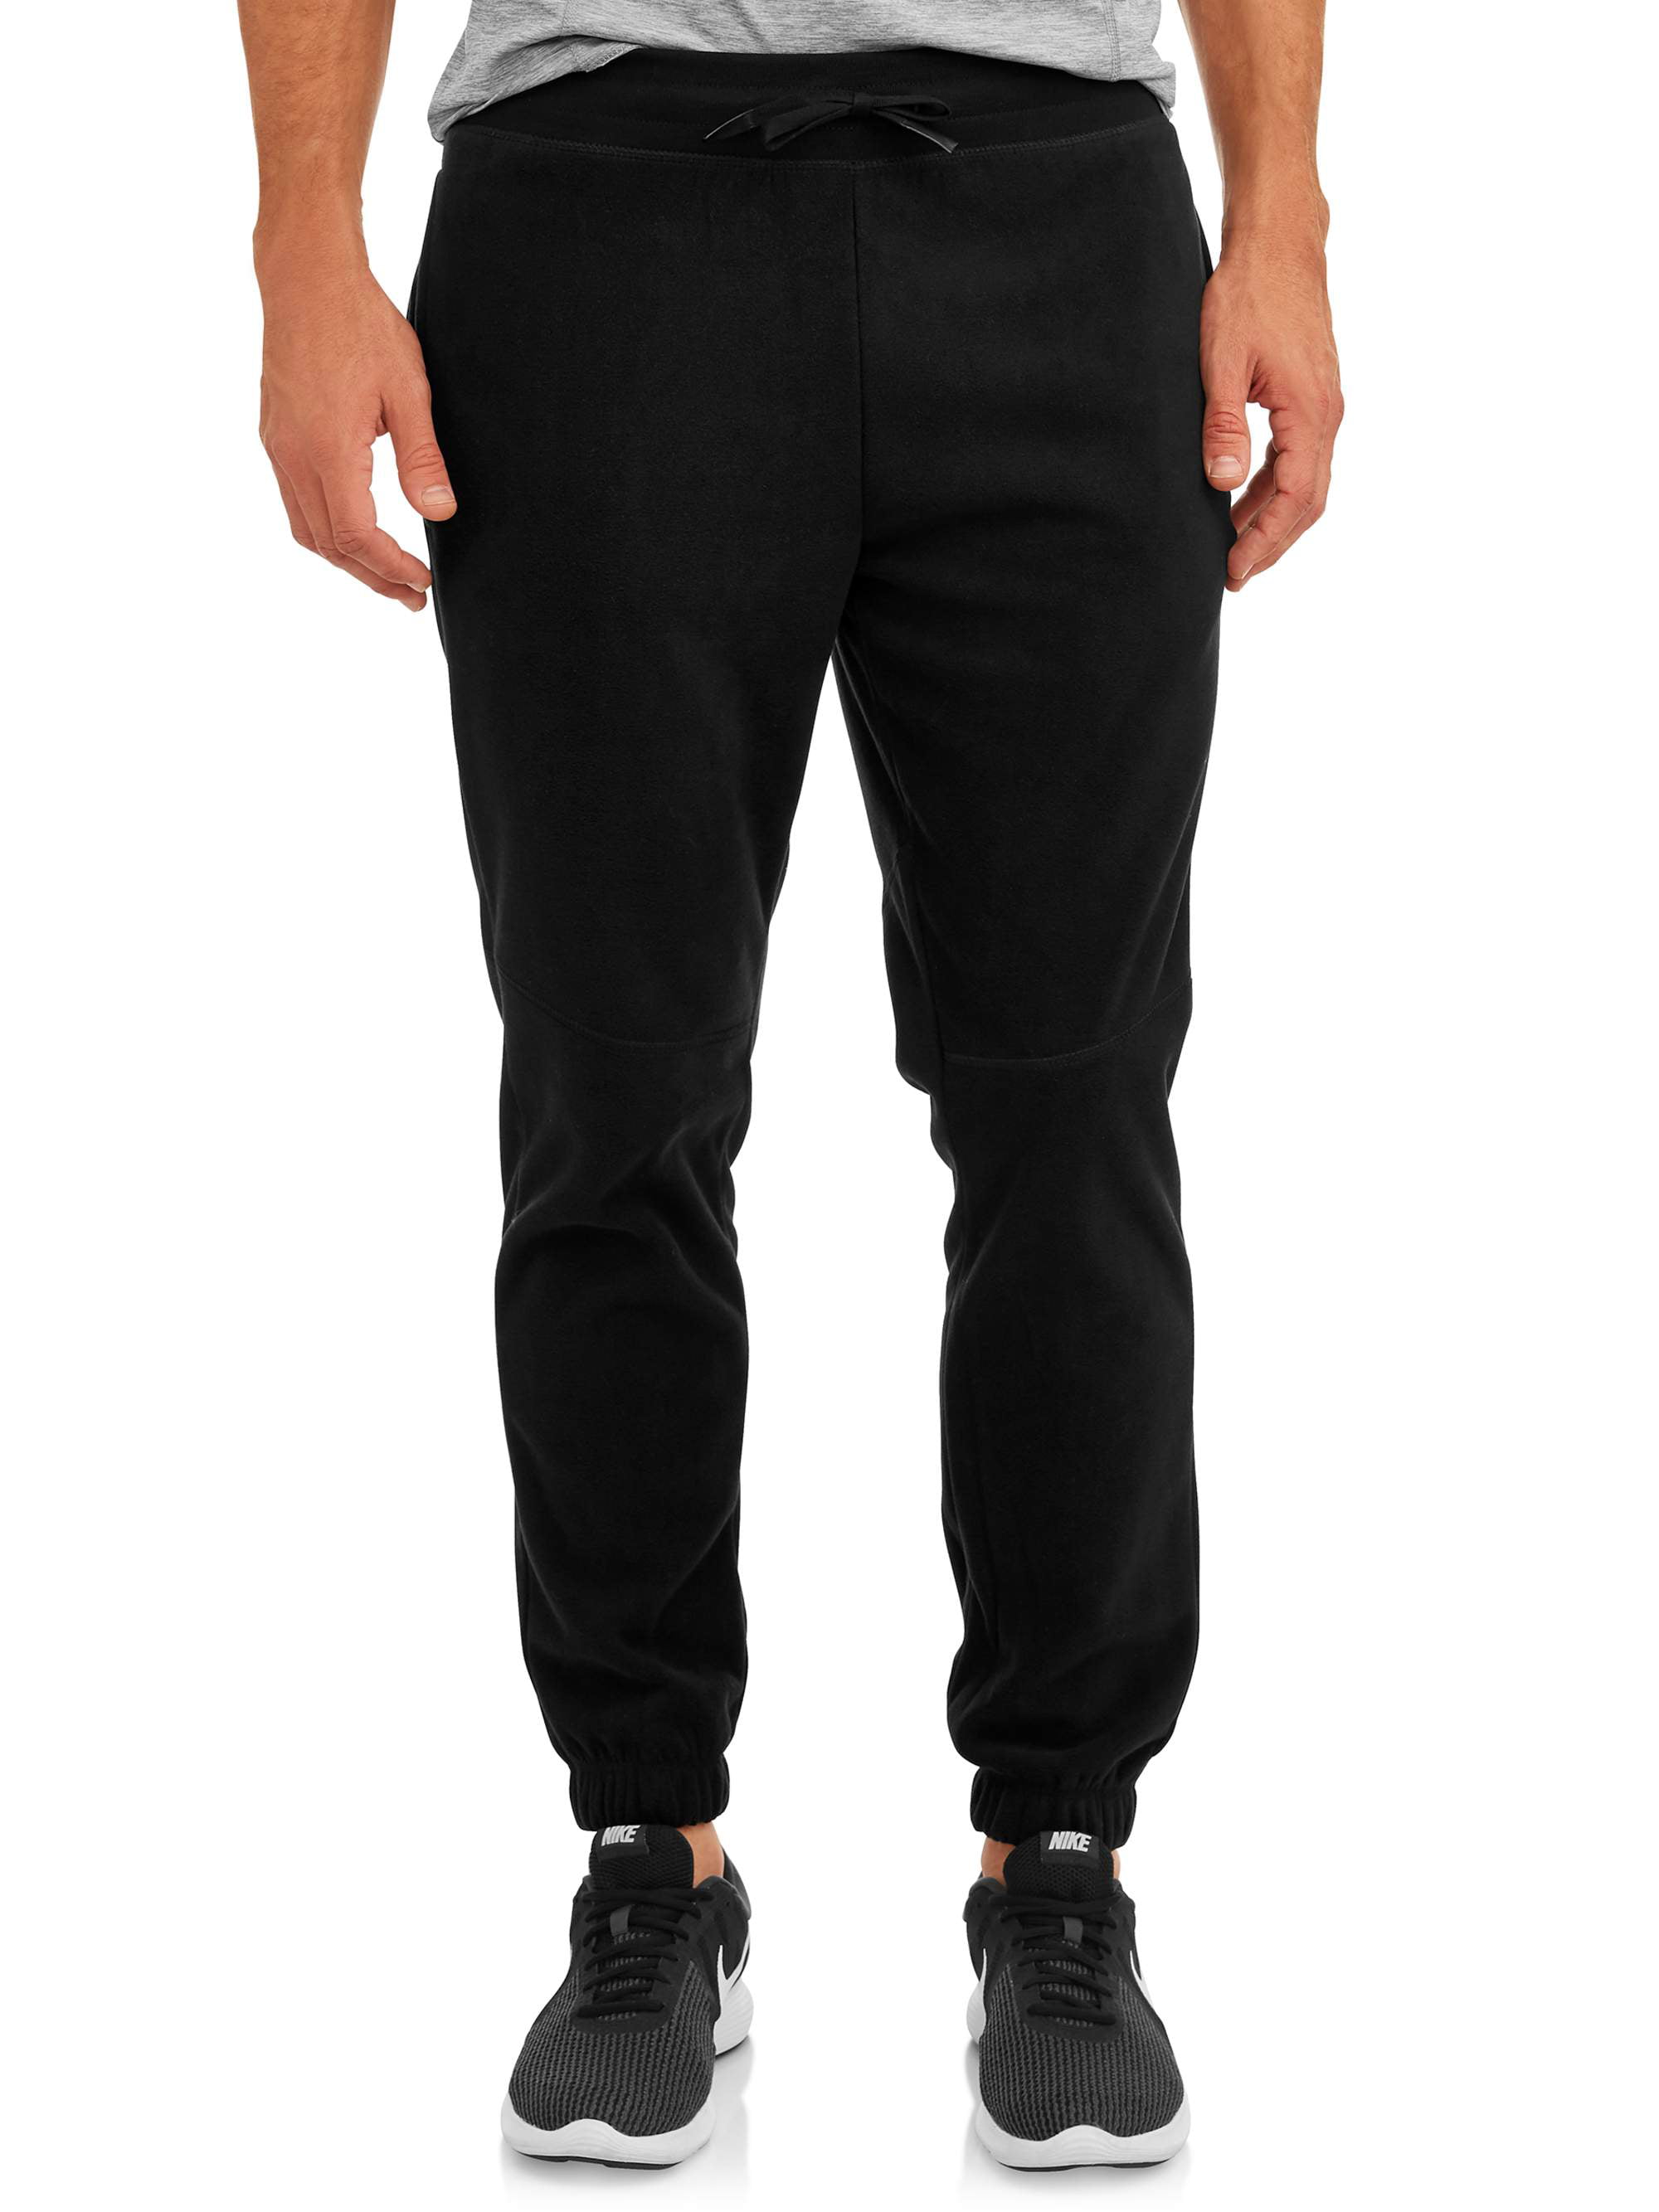 Russell Men's and Big Men's Microfleece Pants, up to Size 5XL - Walmart.com